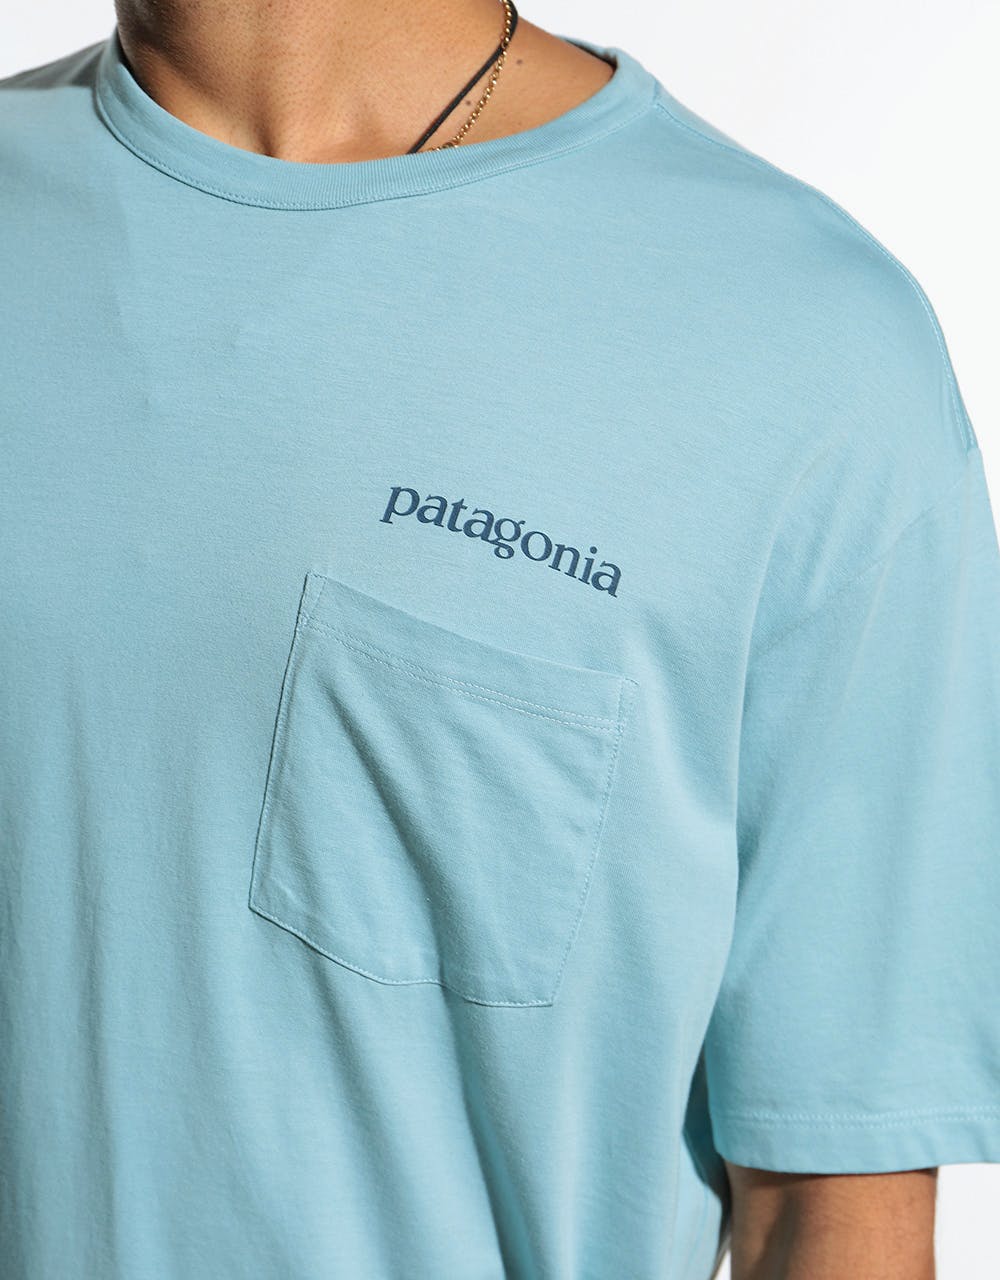 Patagonia Road to Regenerative Pocket T-Shirt - Big Sky Blue